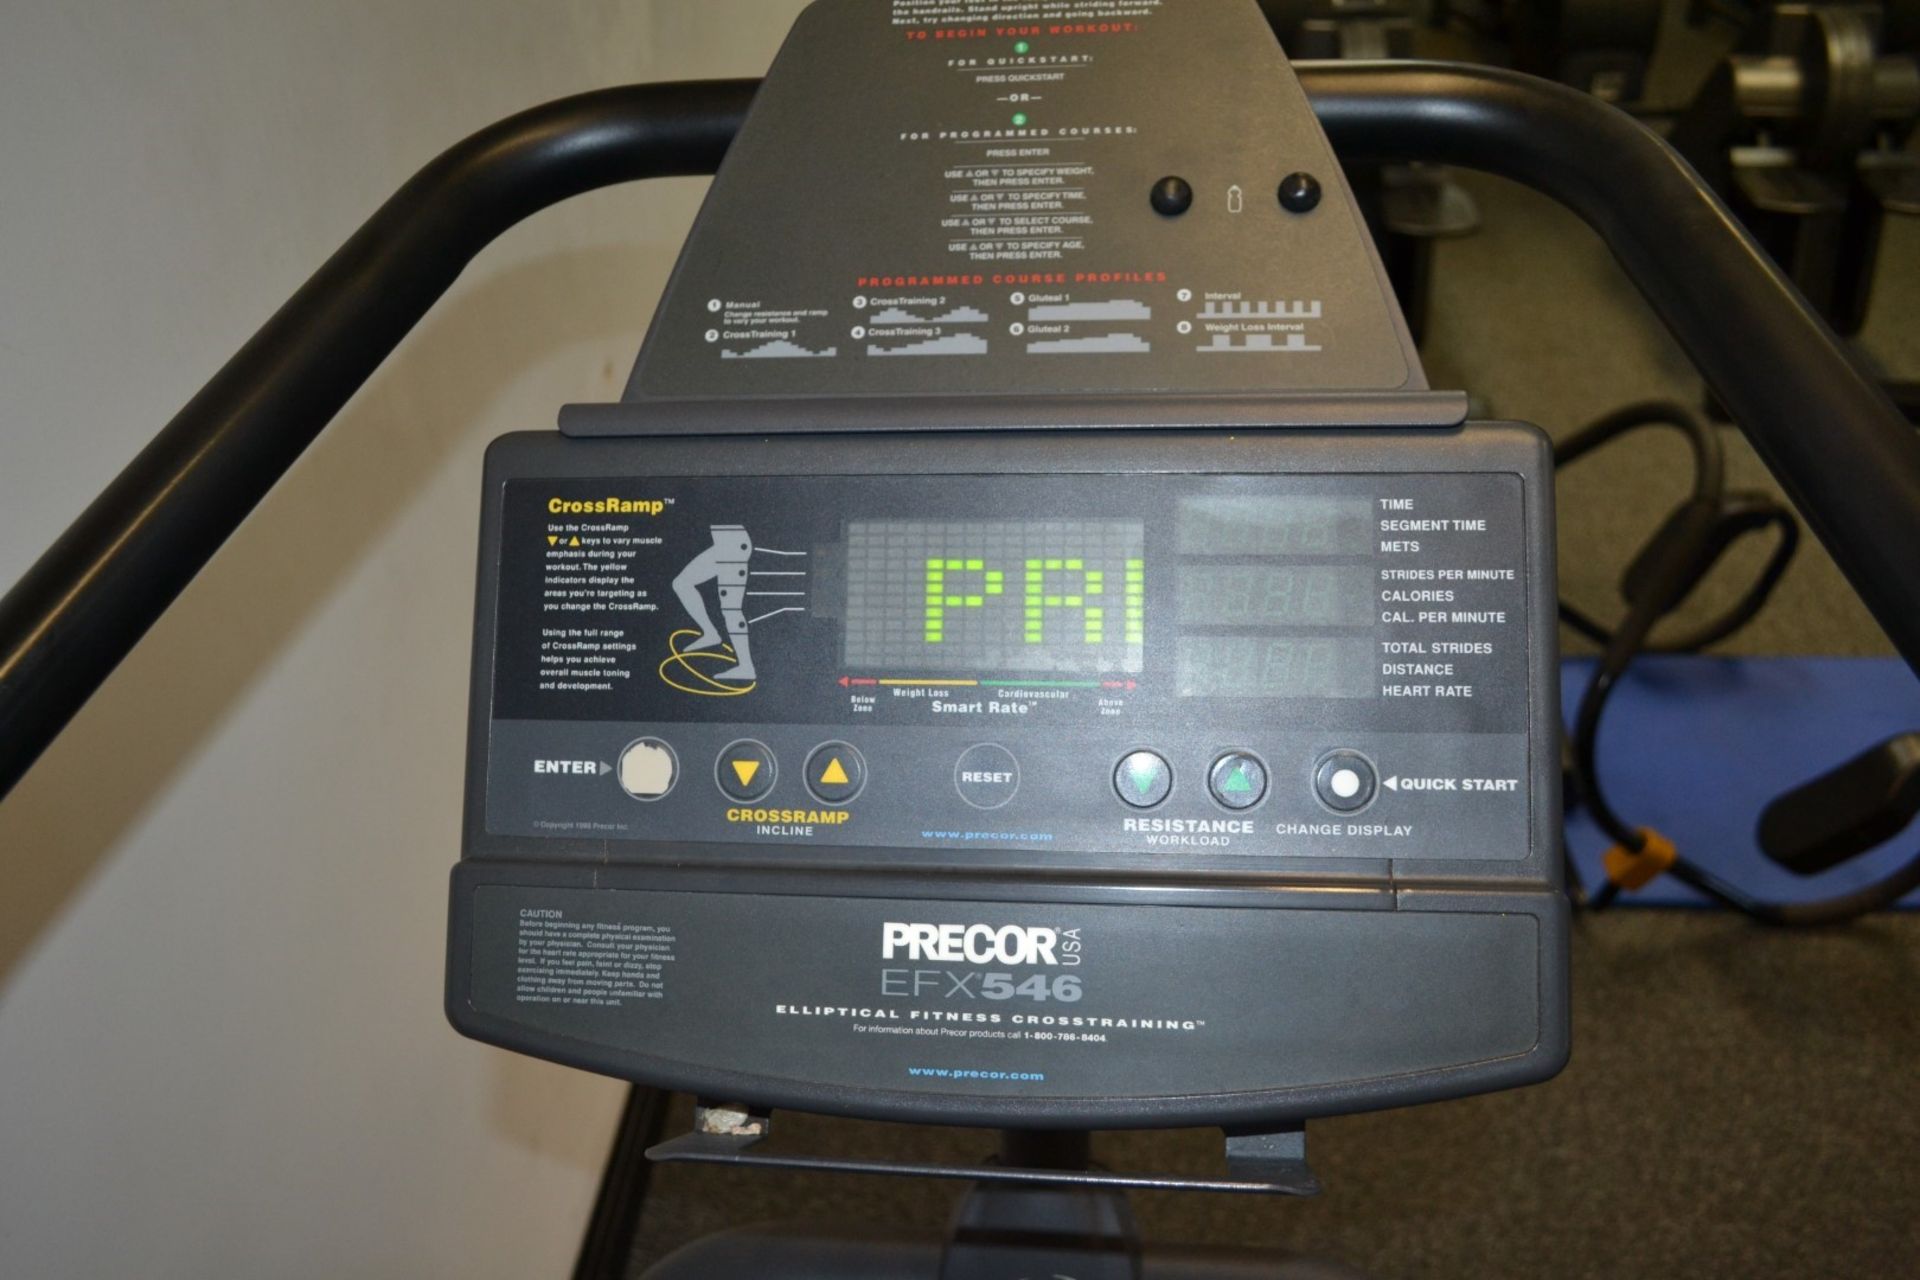 1 x Precor EFX 546 Cross-Trainer Gym Machine - Dimensions: L200 x W90 x H155cm - Ref: J2040/1FG - - Image 3 of 3